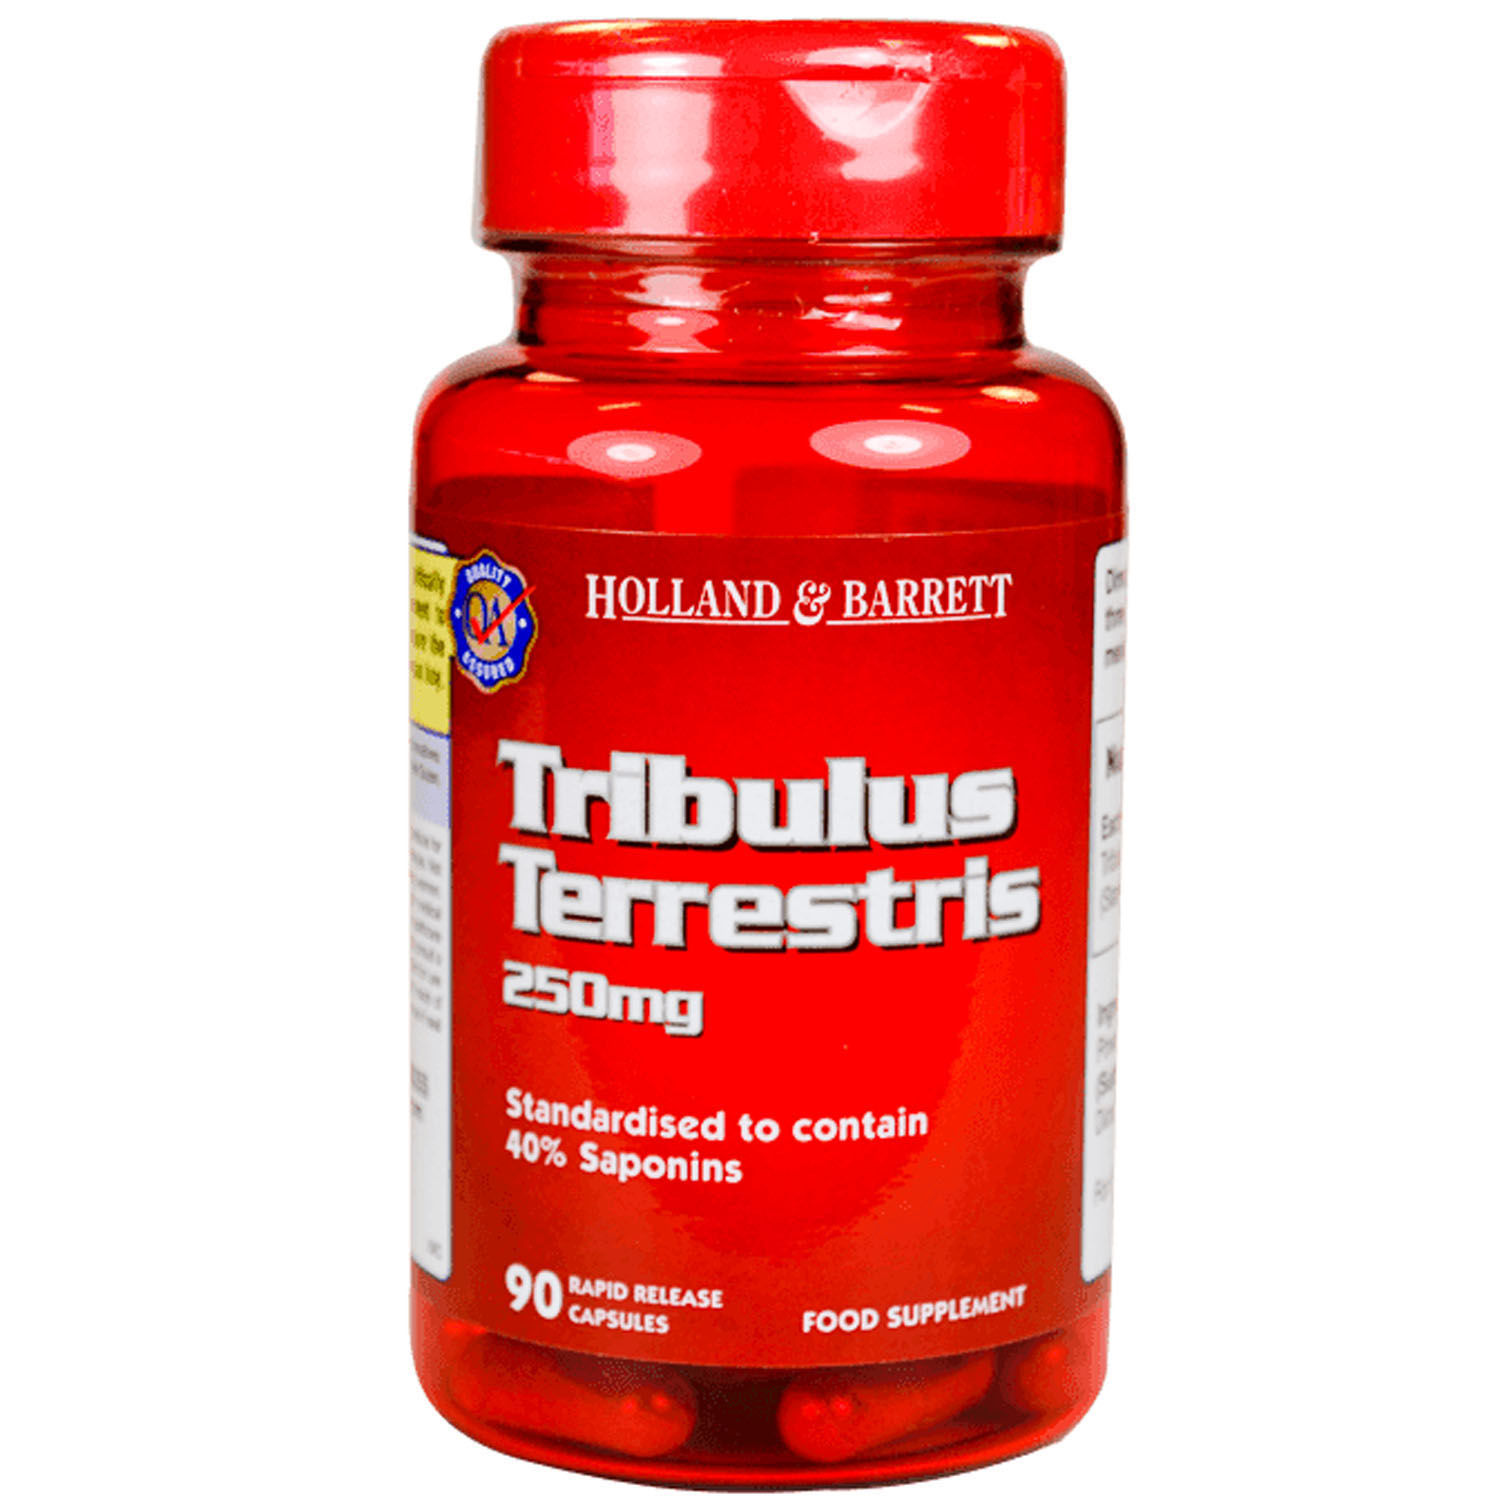 Buy Holland & Barrett Tribulus Terrestris 250 mg, 90 Capsules Online